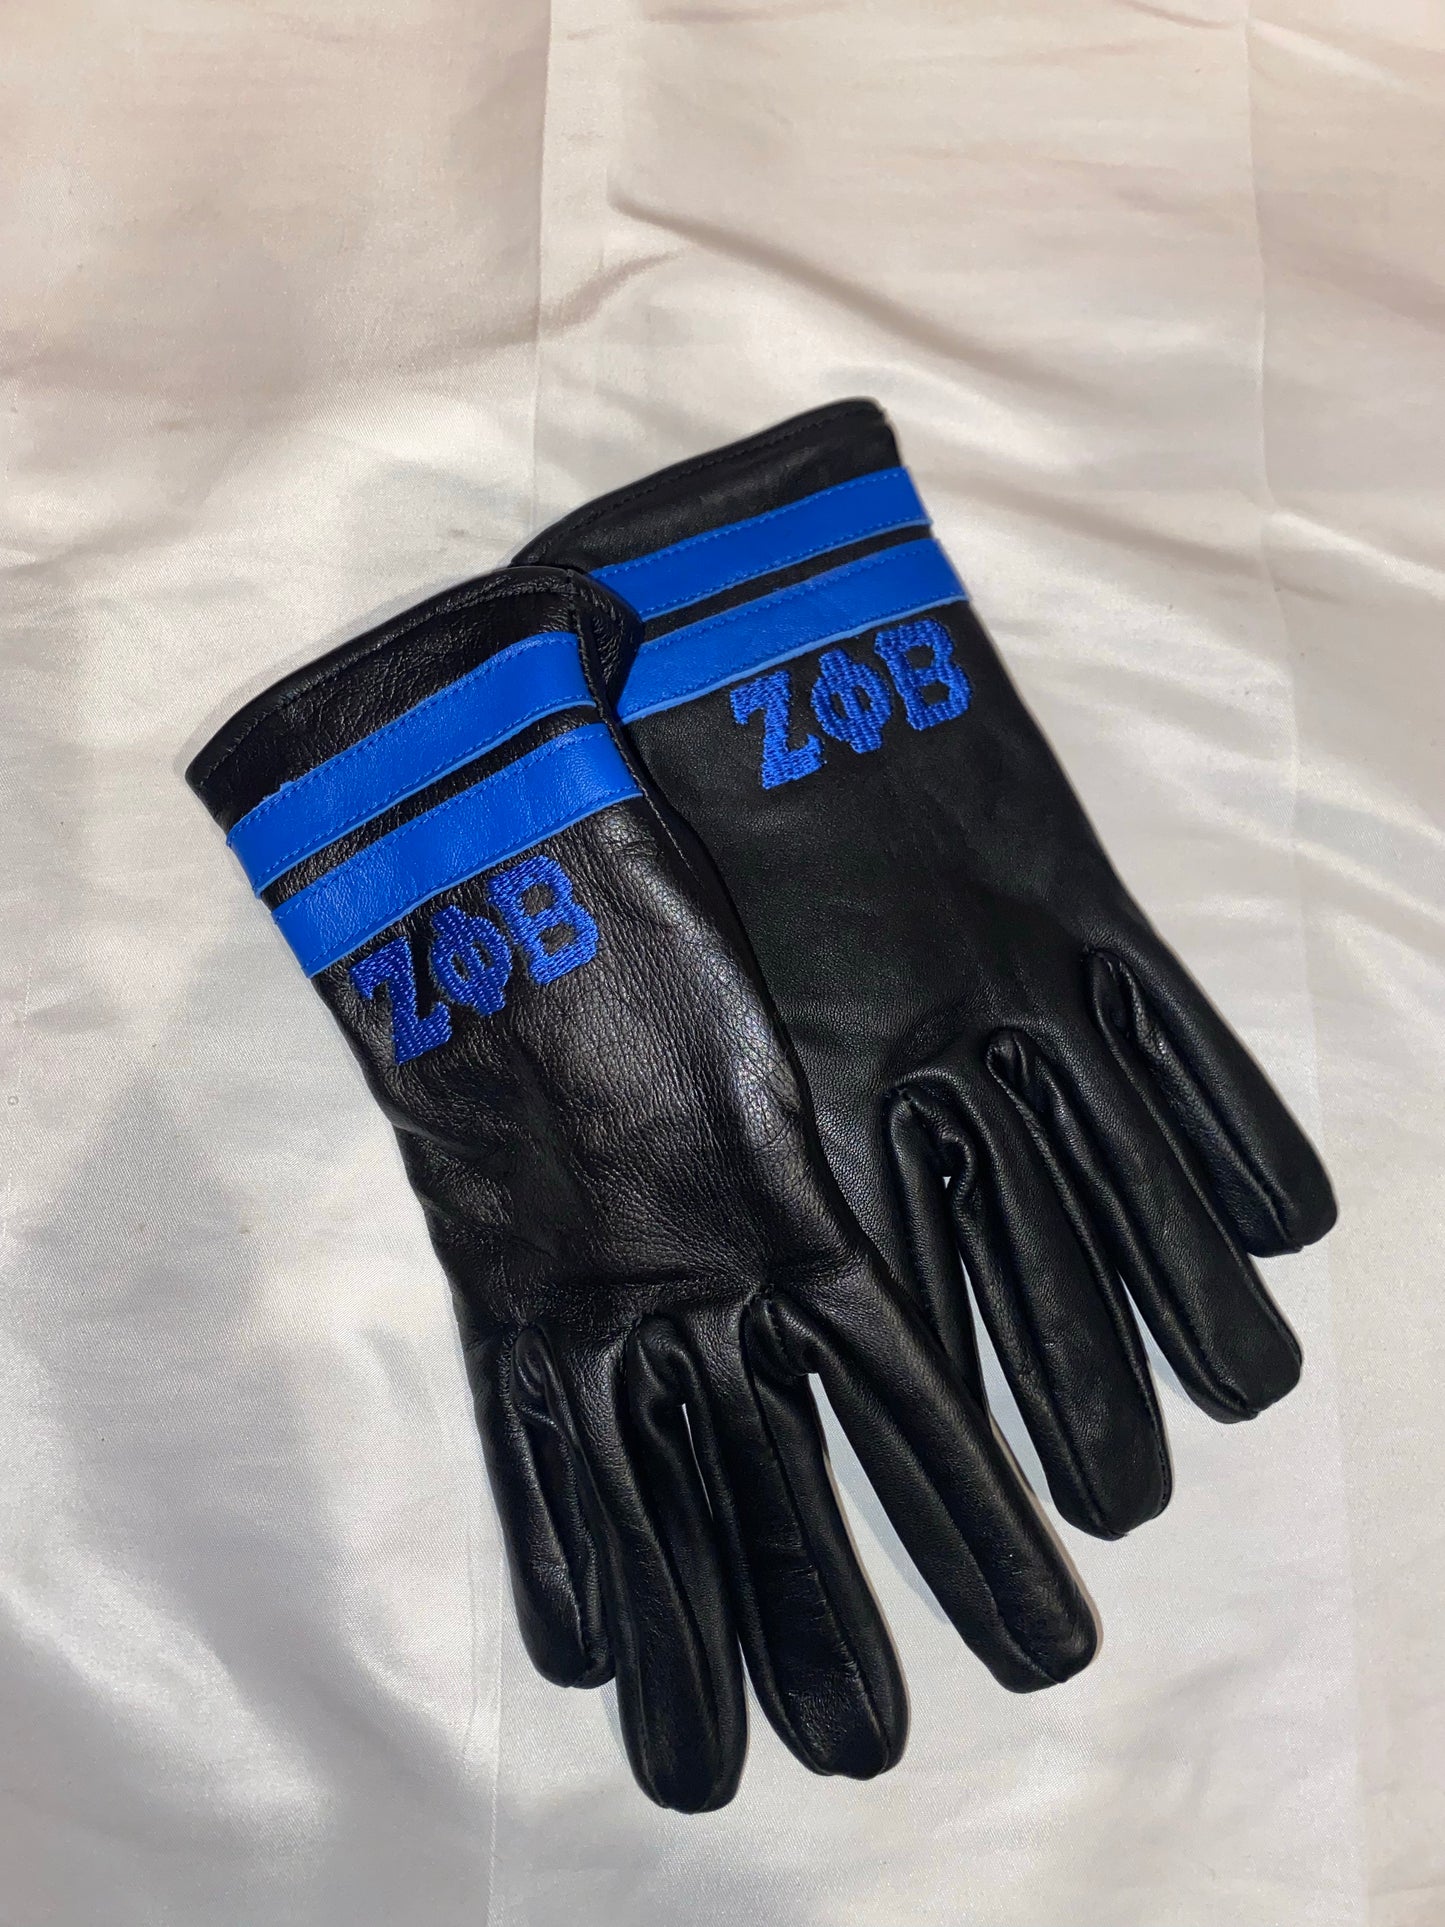 ZETA Leather Gloves